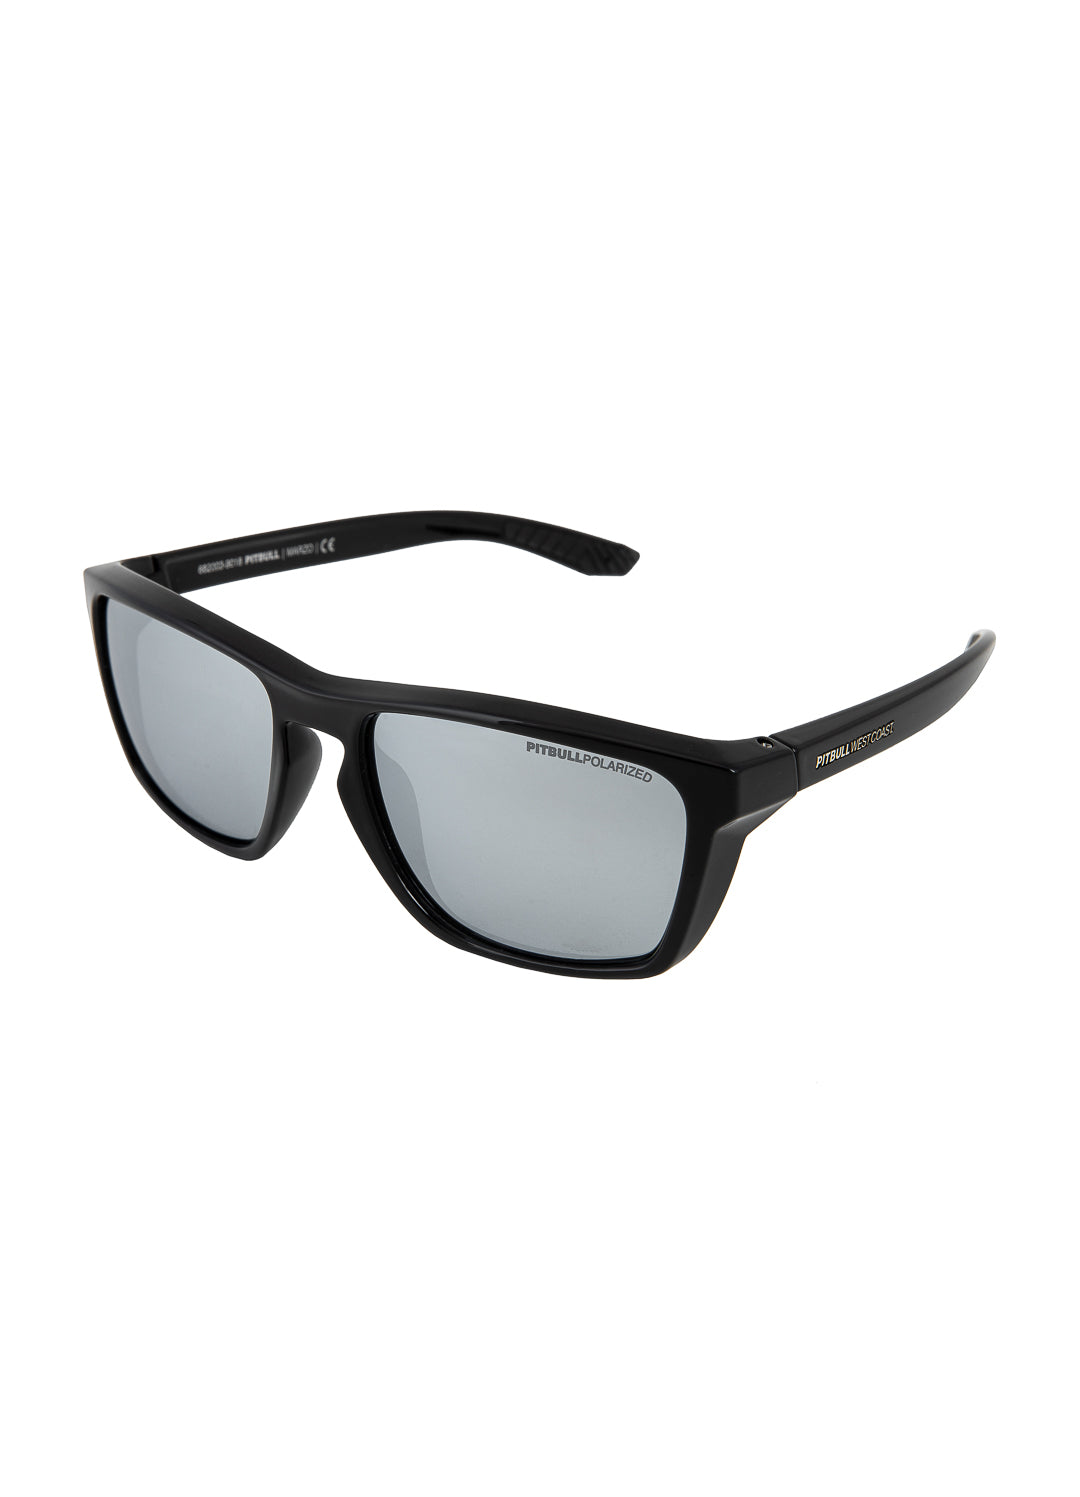 Sunglasses MARZO Black/Silver - Pitbull West Coast International Store 